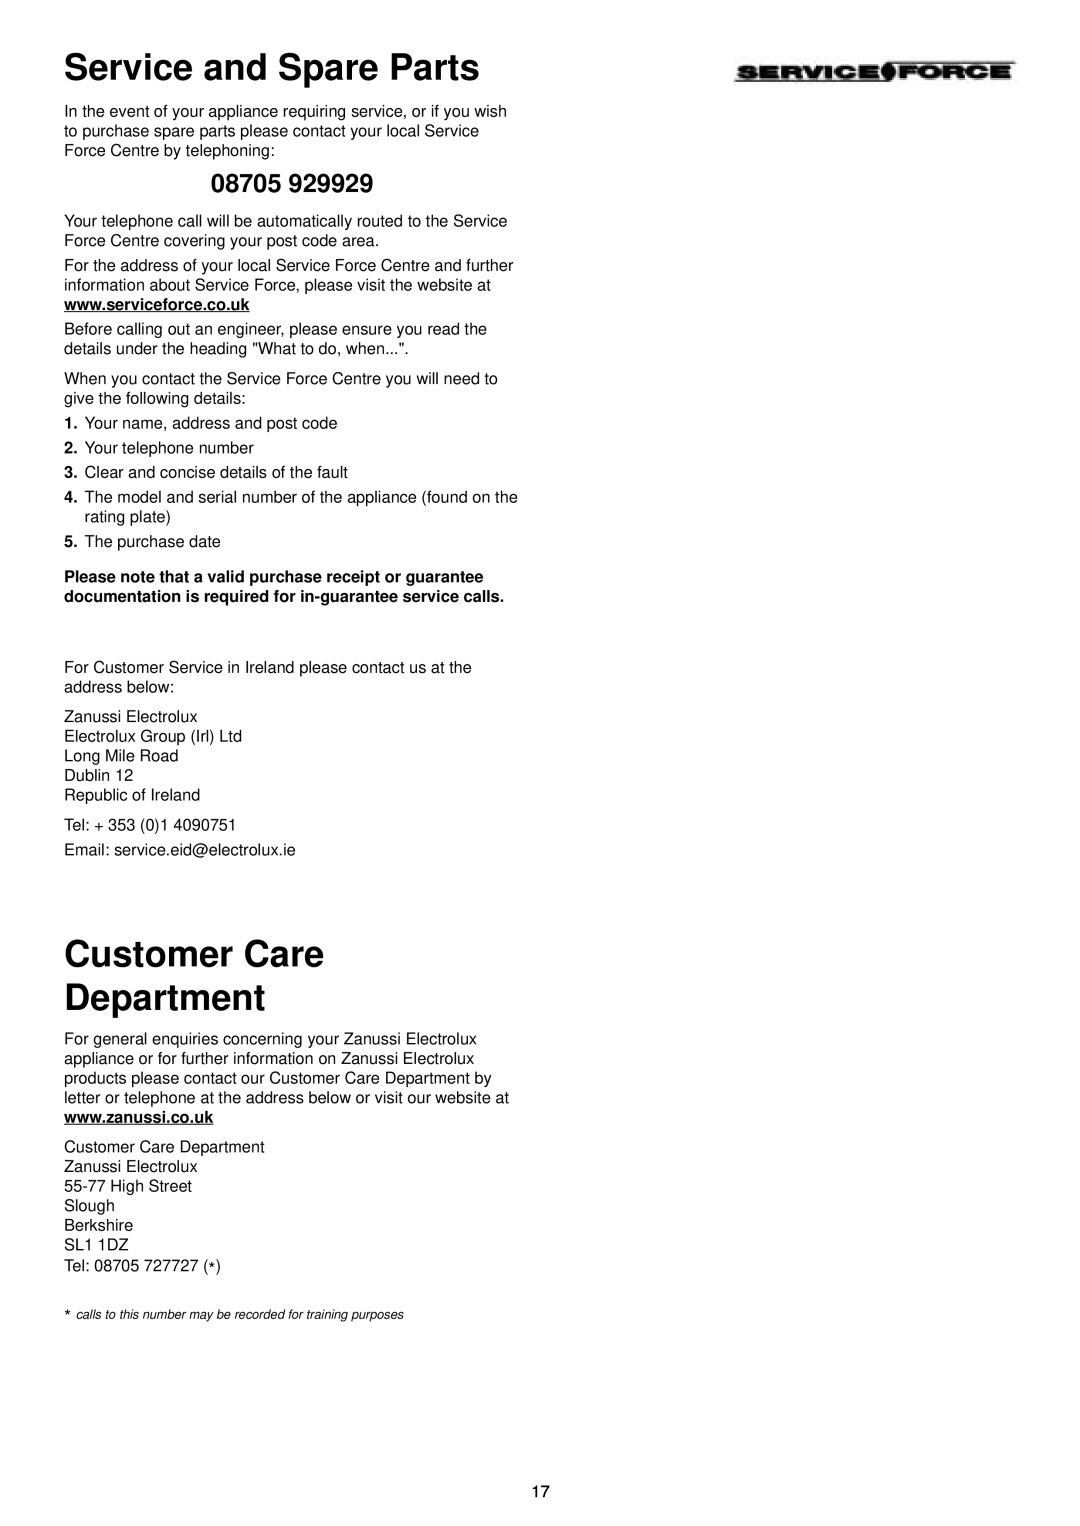 Zanussi DE 6865 manual Service and Spare Parts, Customer Care Department, 08705 